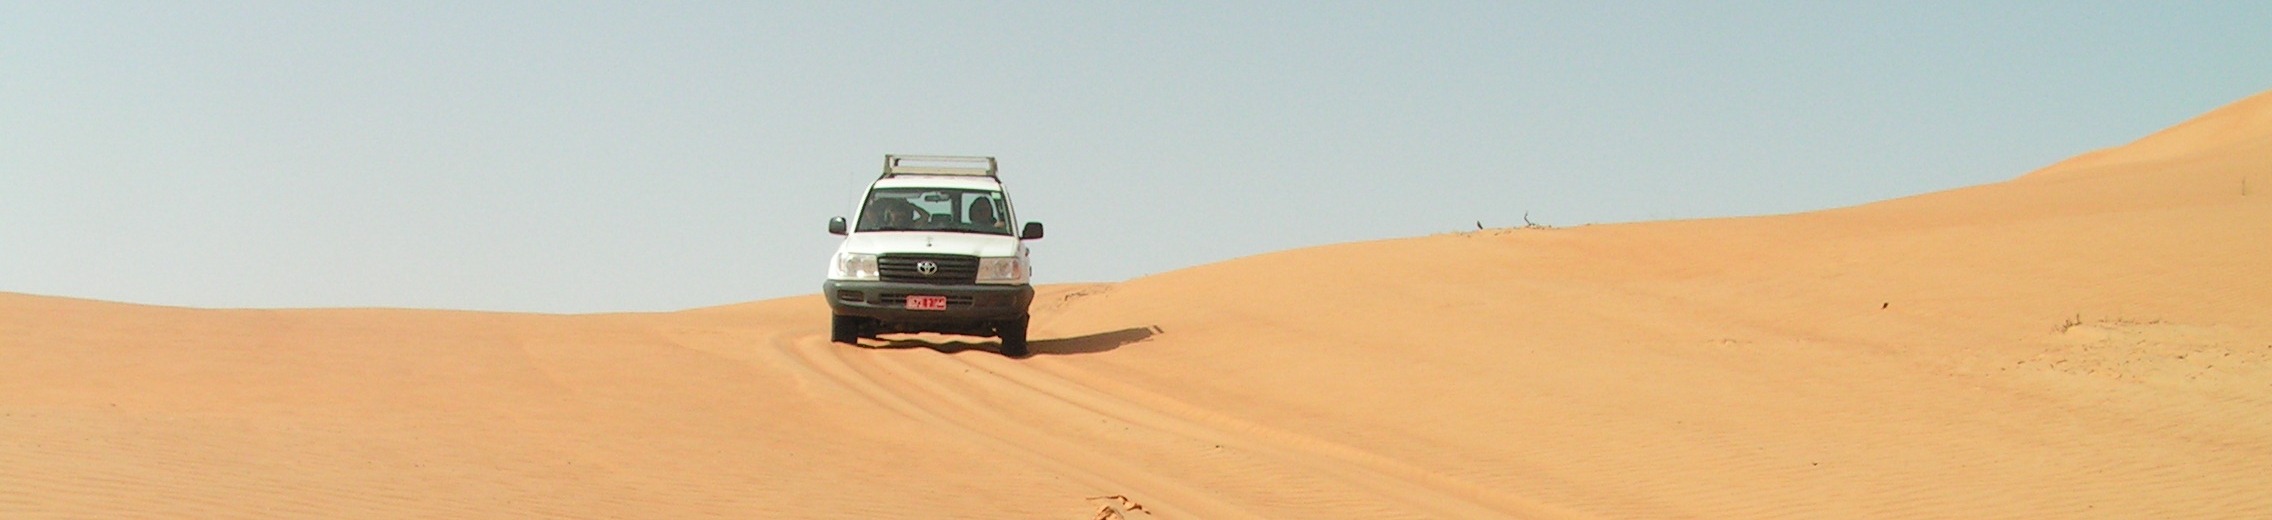 Jeep Adventure in Oman